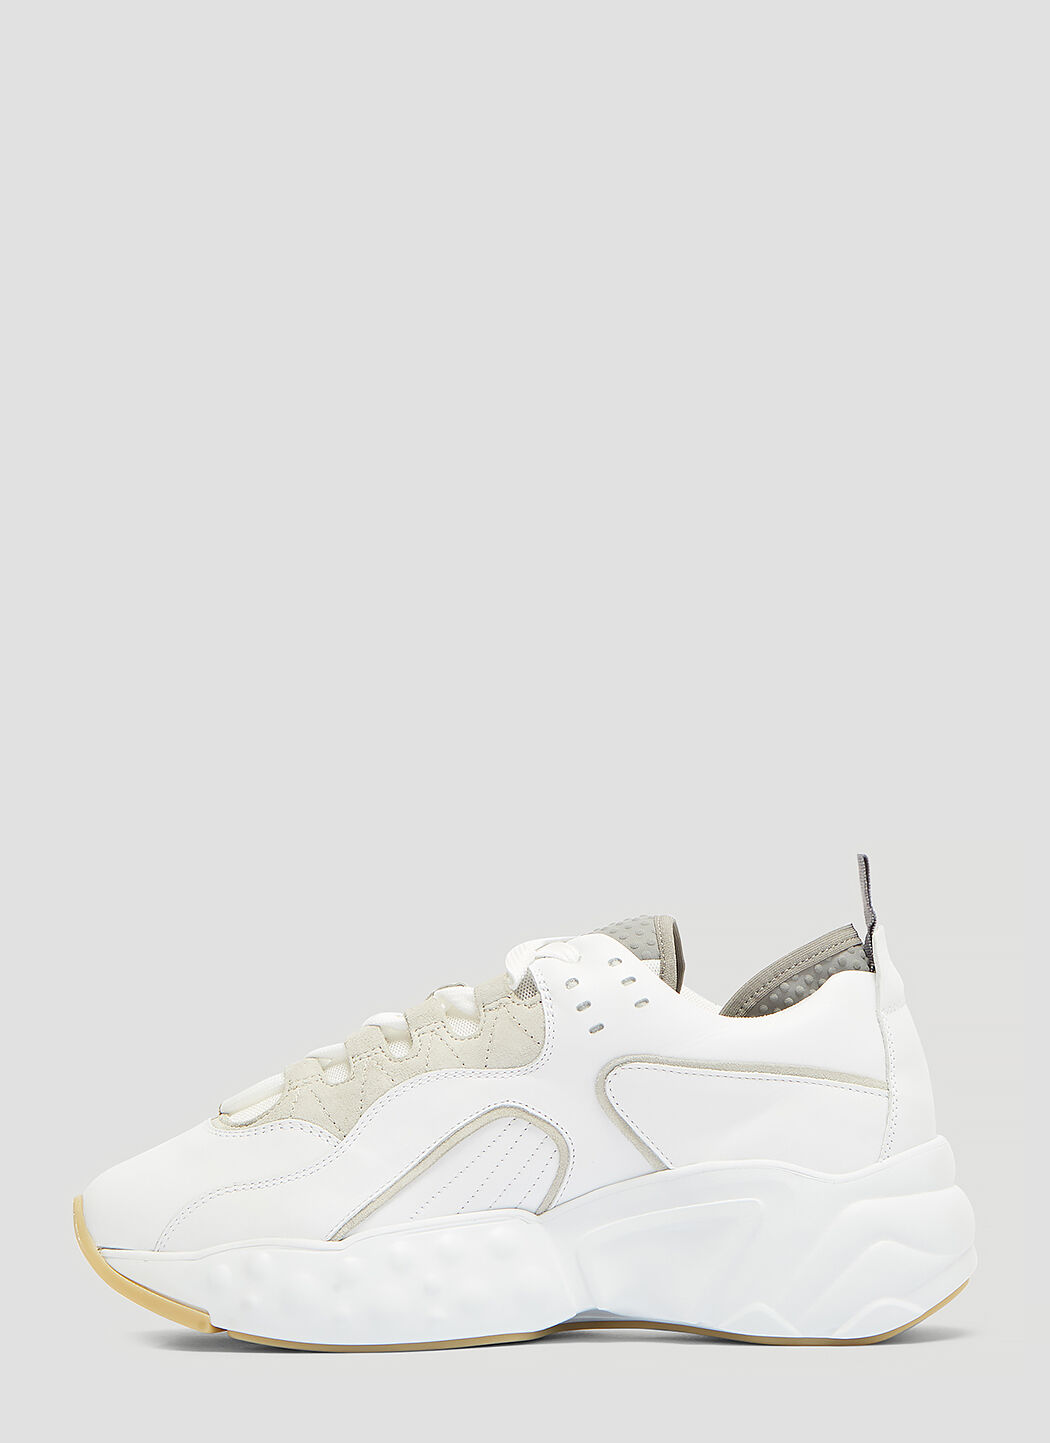 Acne Studios Rockaway Leather Sneakers in White | LN-CC®